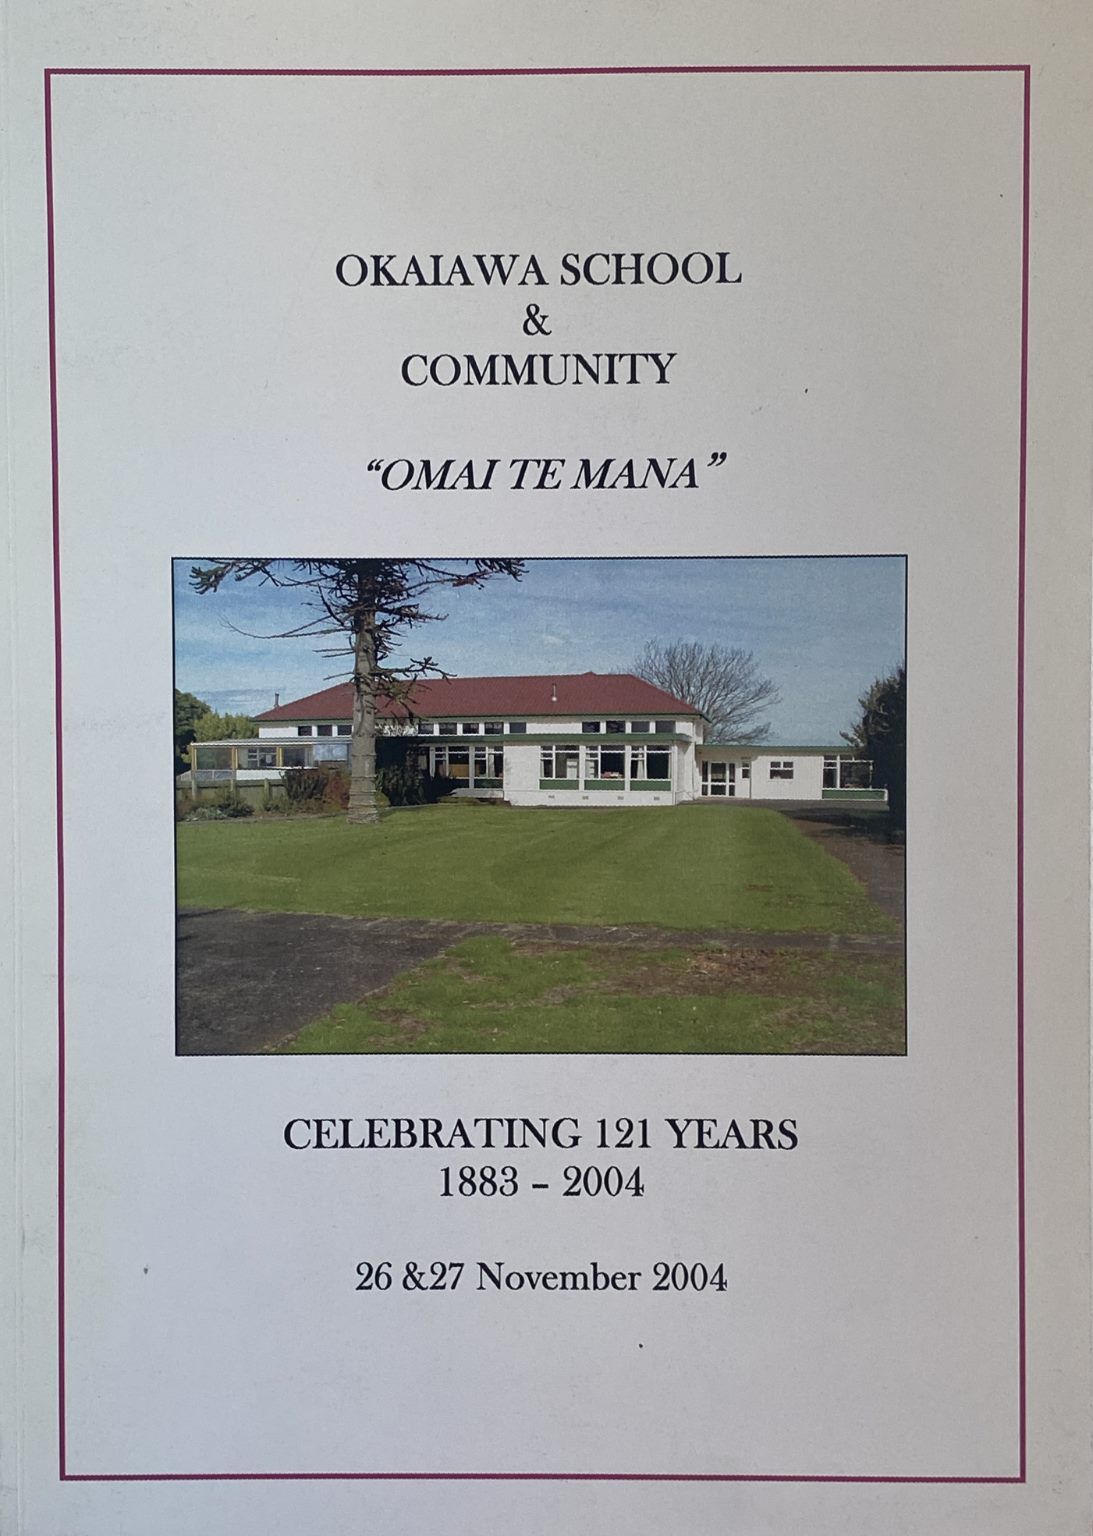 OKAIAWA SCHOOL & COMMUNITY: Celebrating 121 years 1888-2004